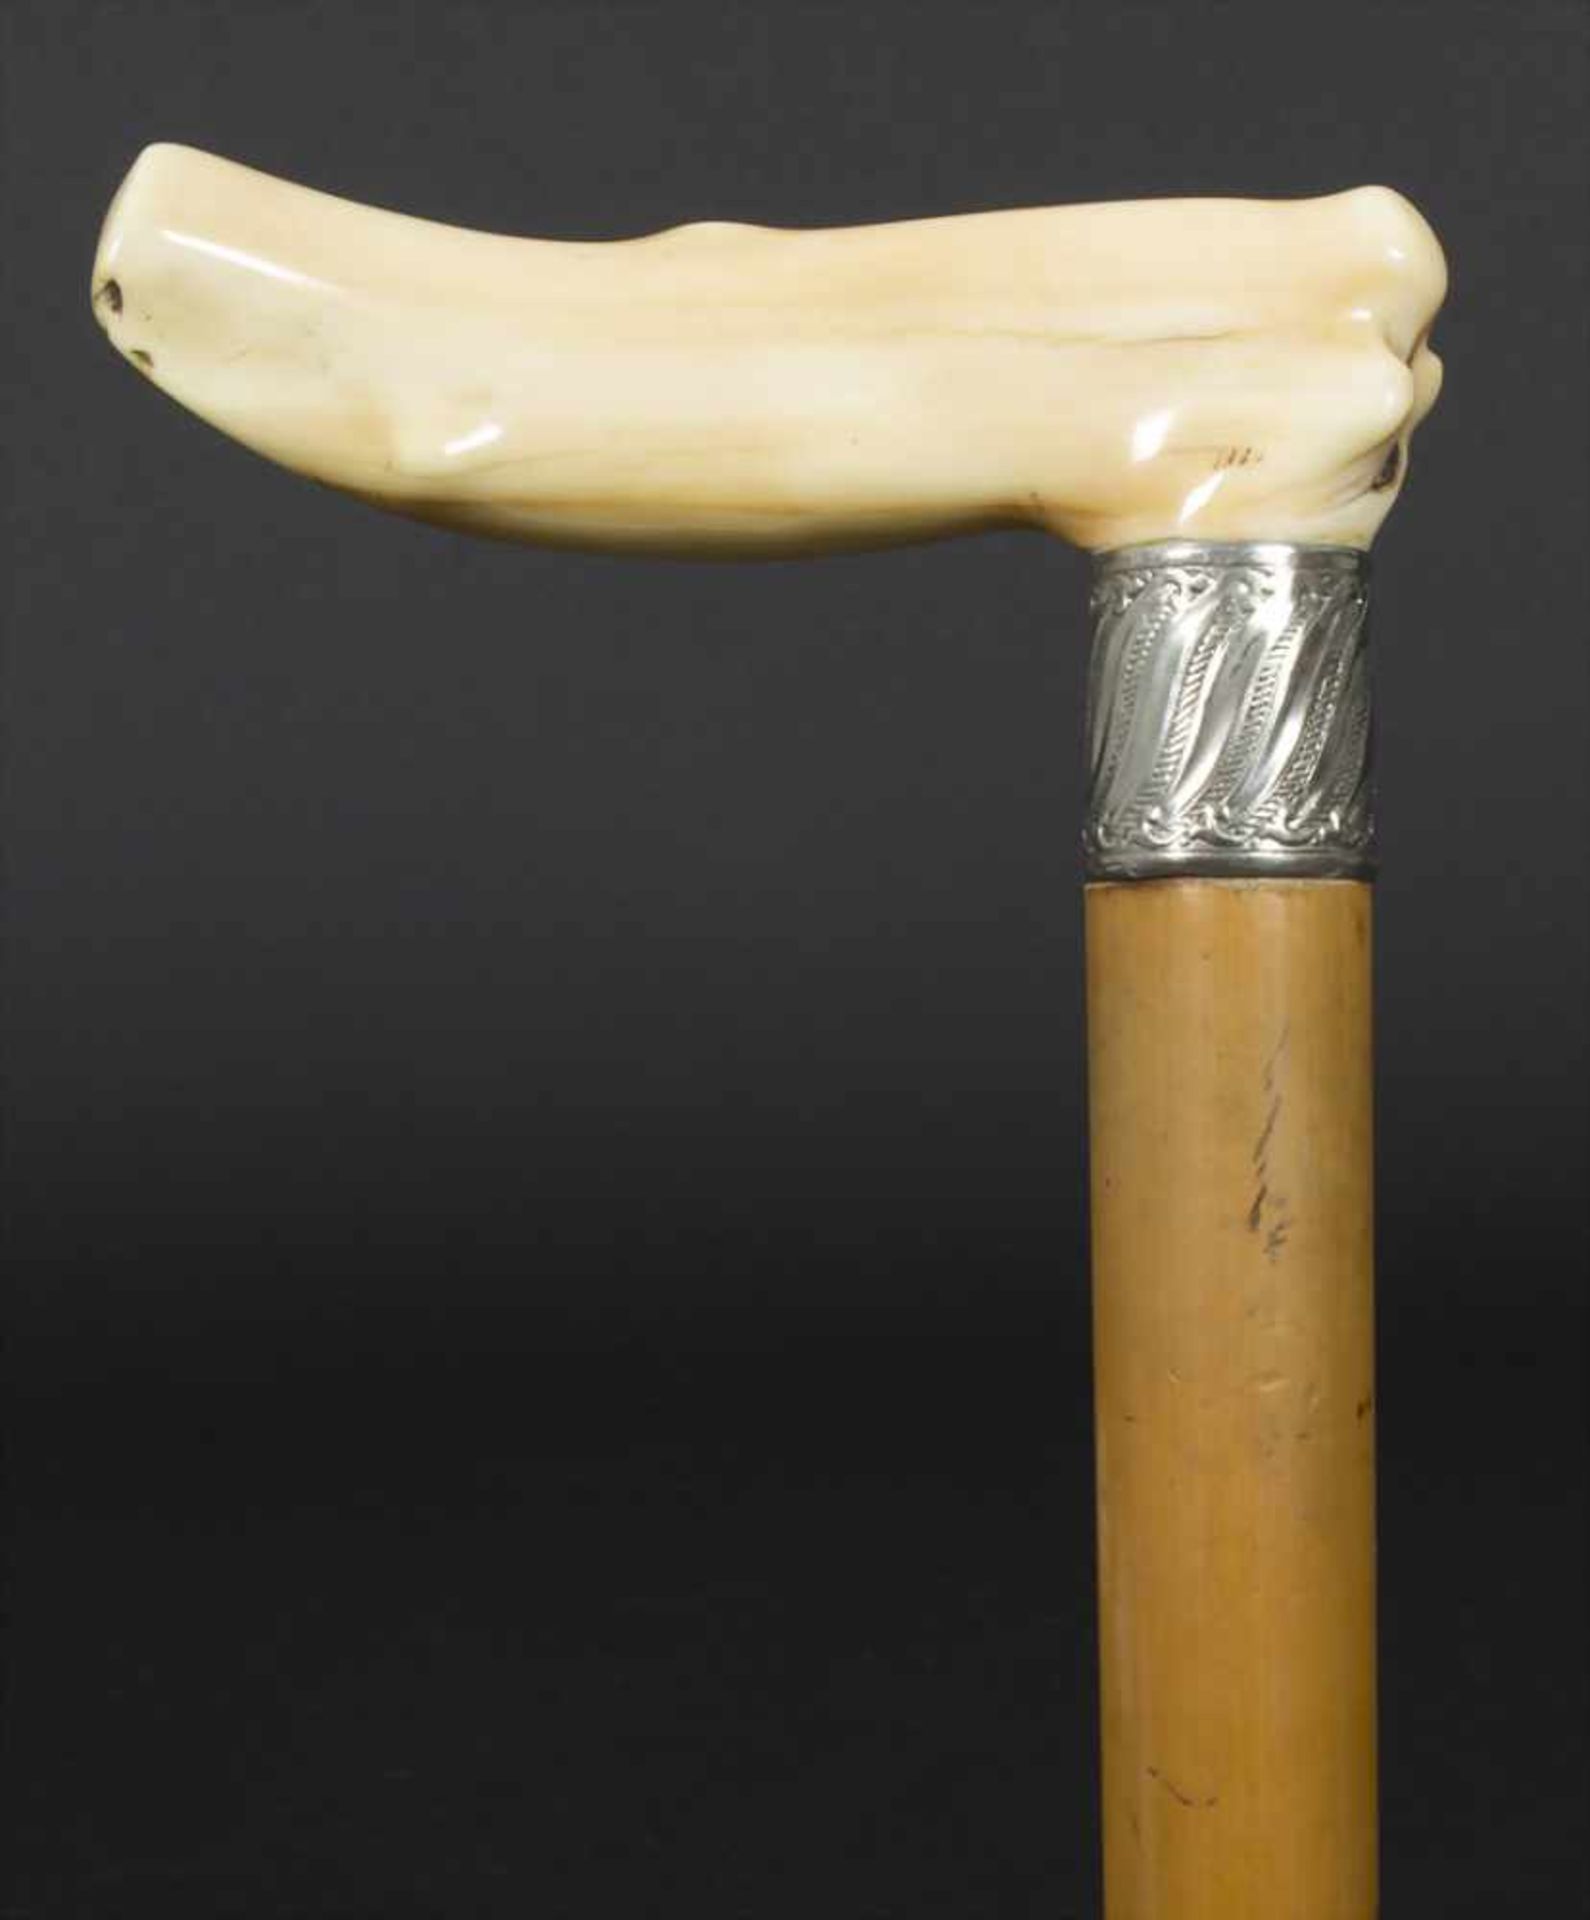 Gehstock mit Elfenbeingriff / A cane with ivory handle, um 1900Material: Malaccarohr (Schuss),